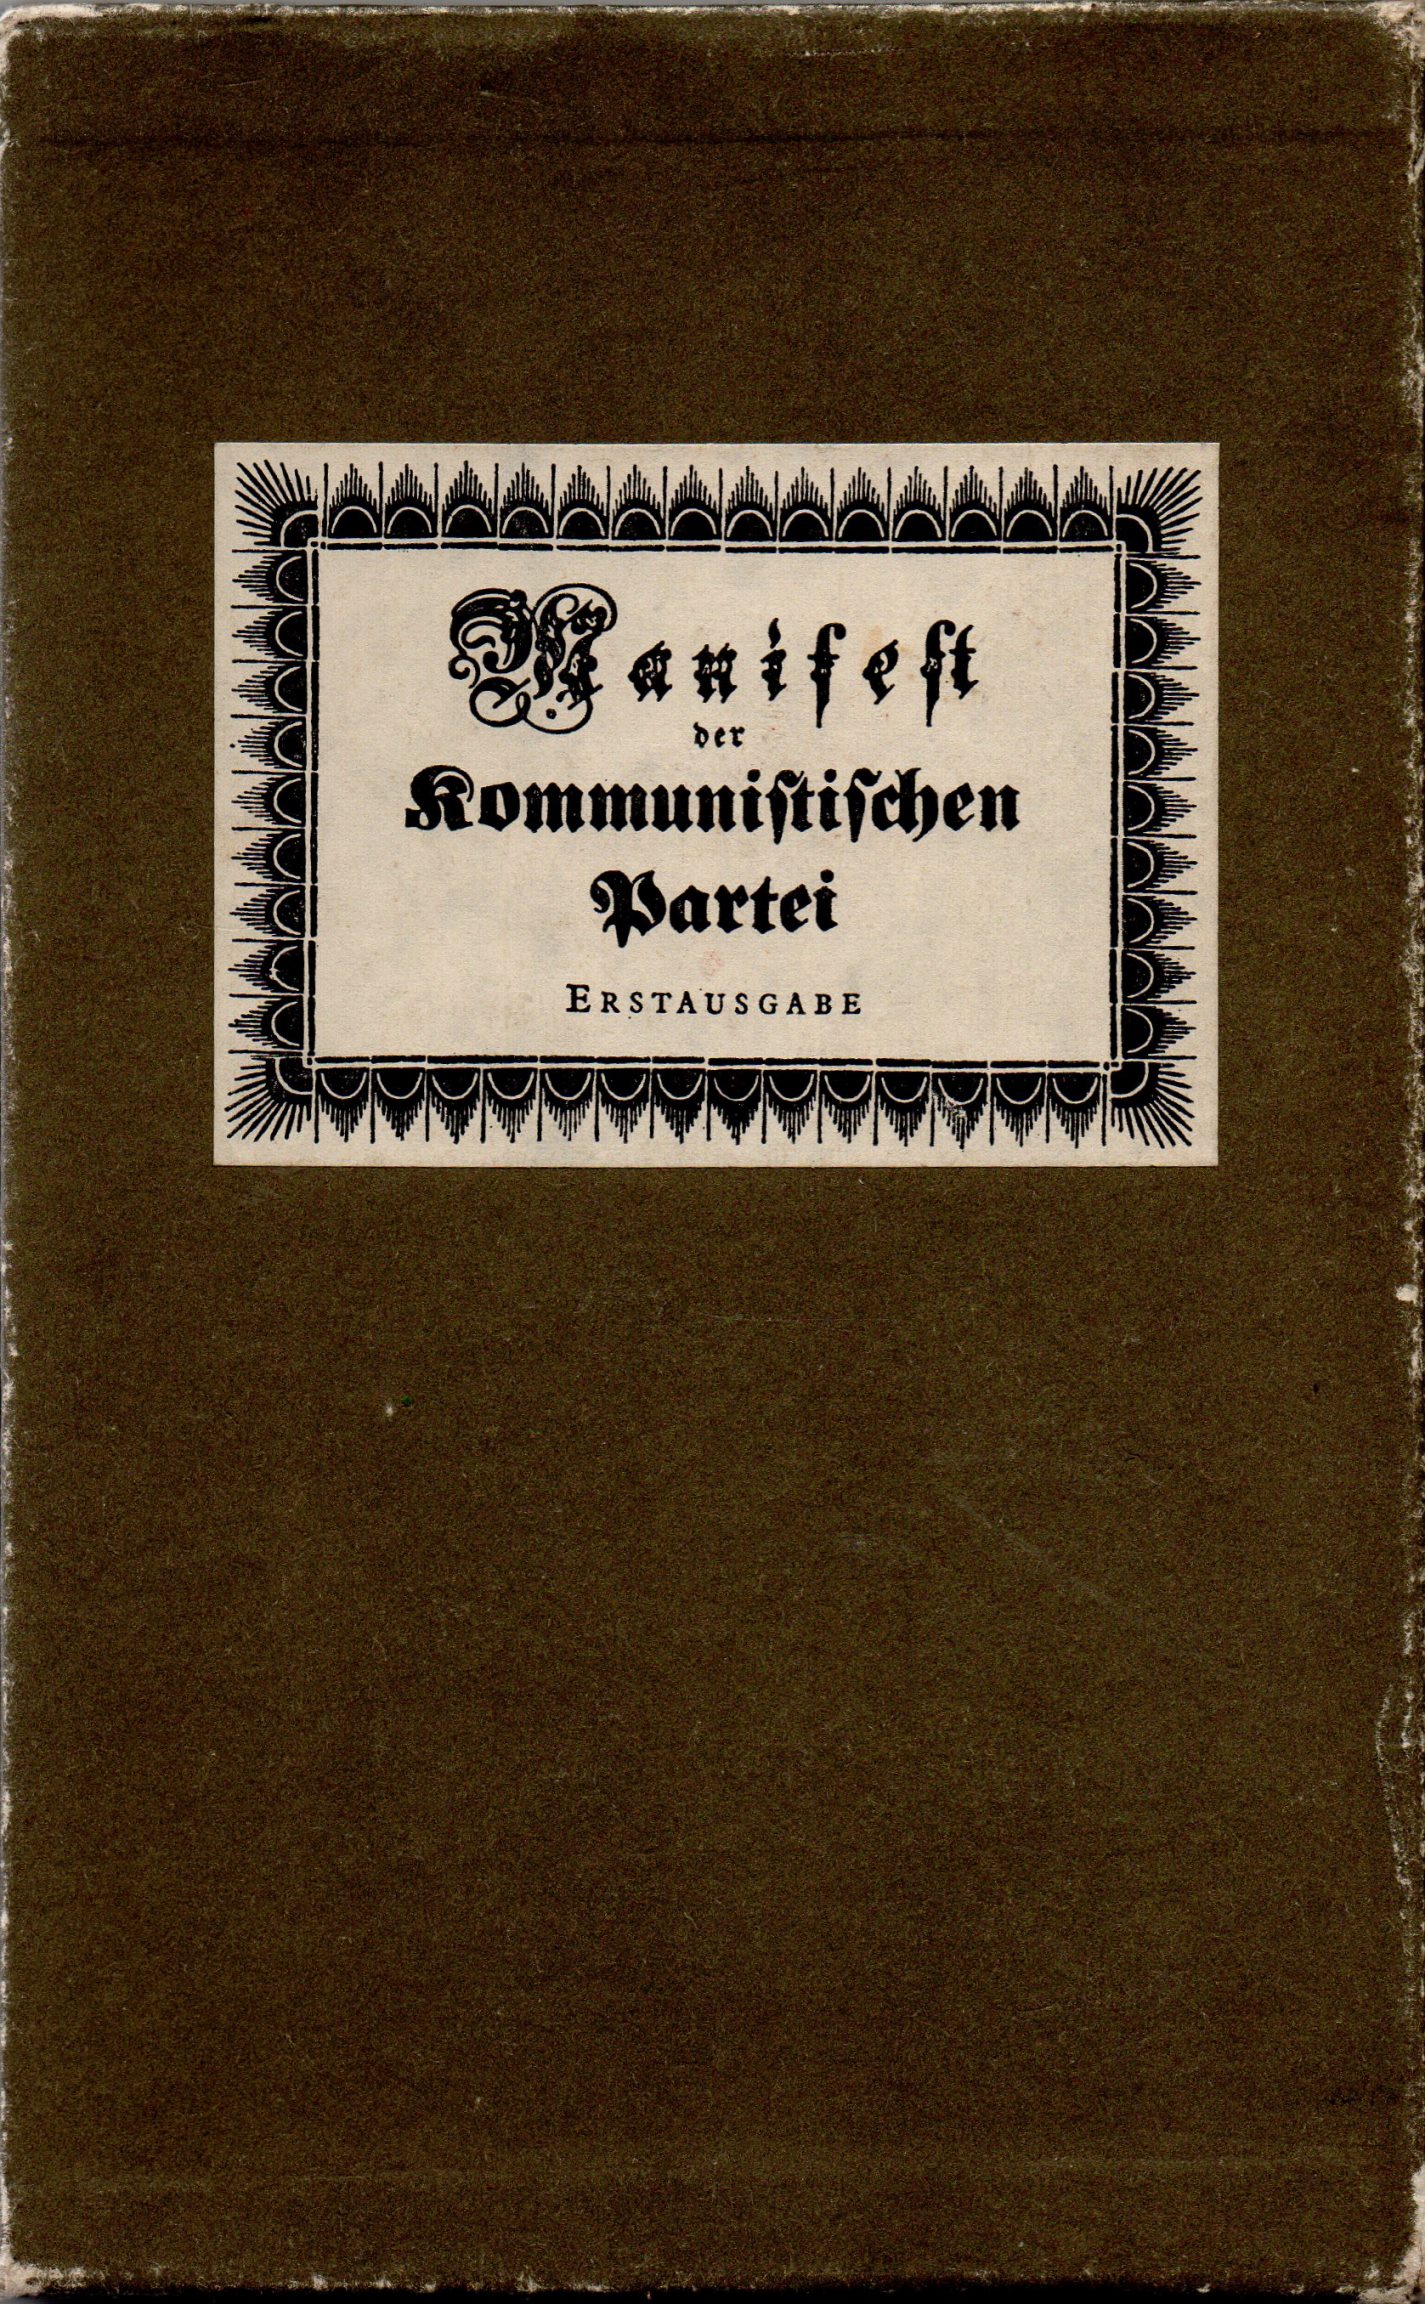 Книга Маркс К., Енгельс Ф. "Manifest der Kommunistischen Partei / Маніфест комуністичної партії"